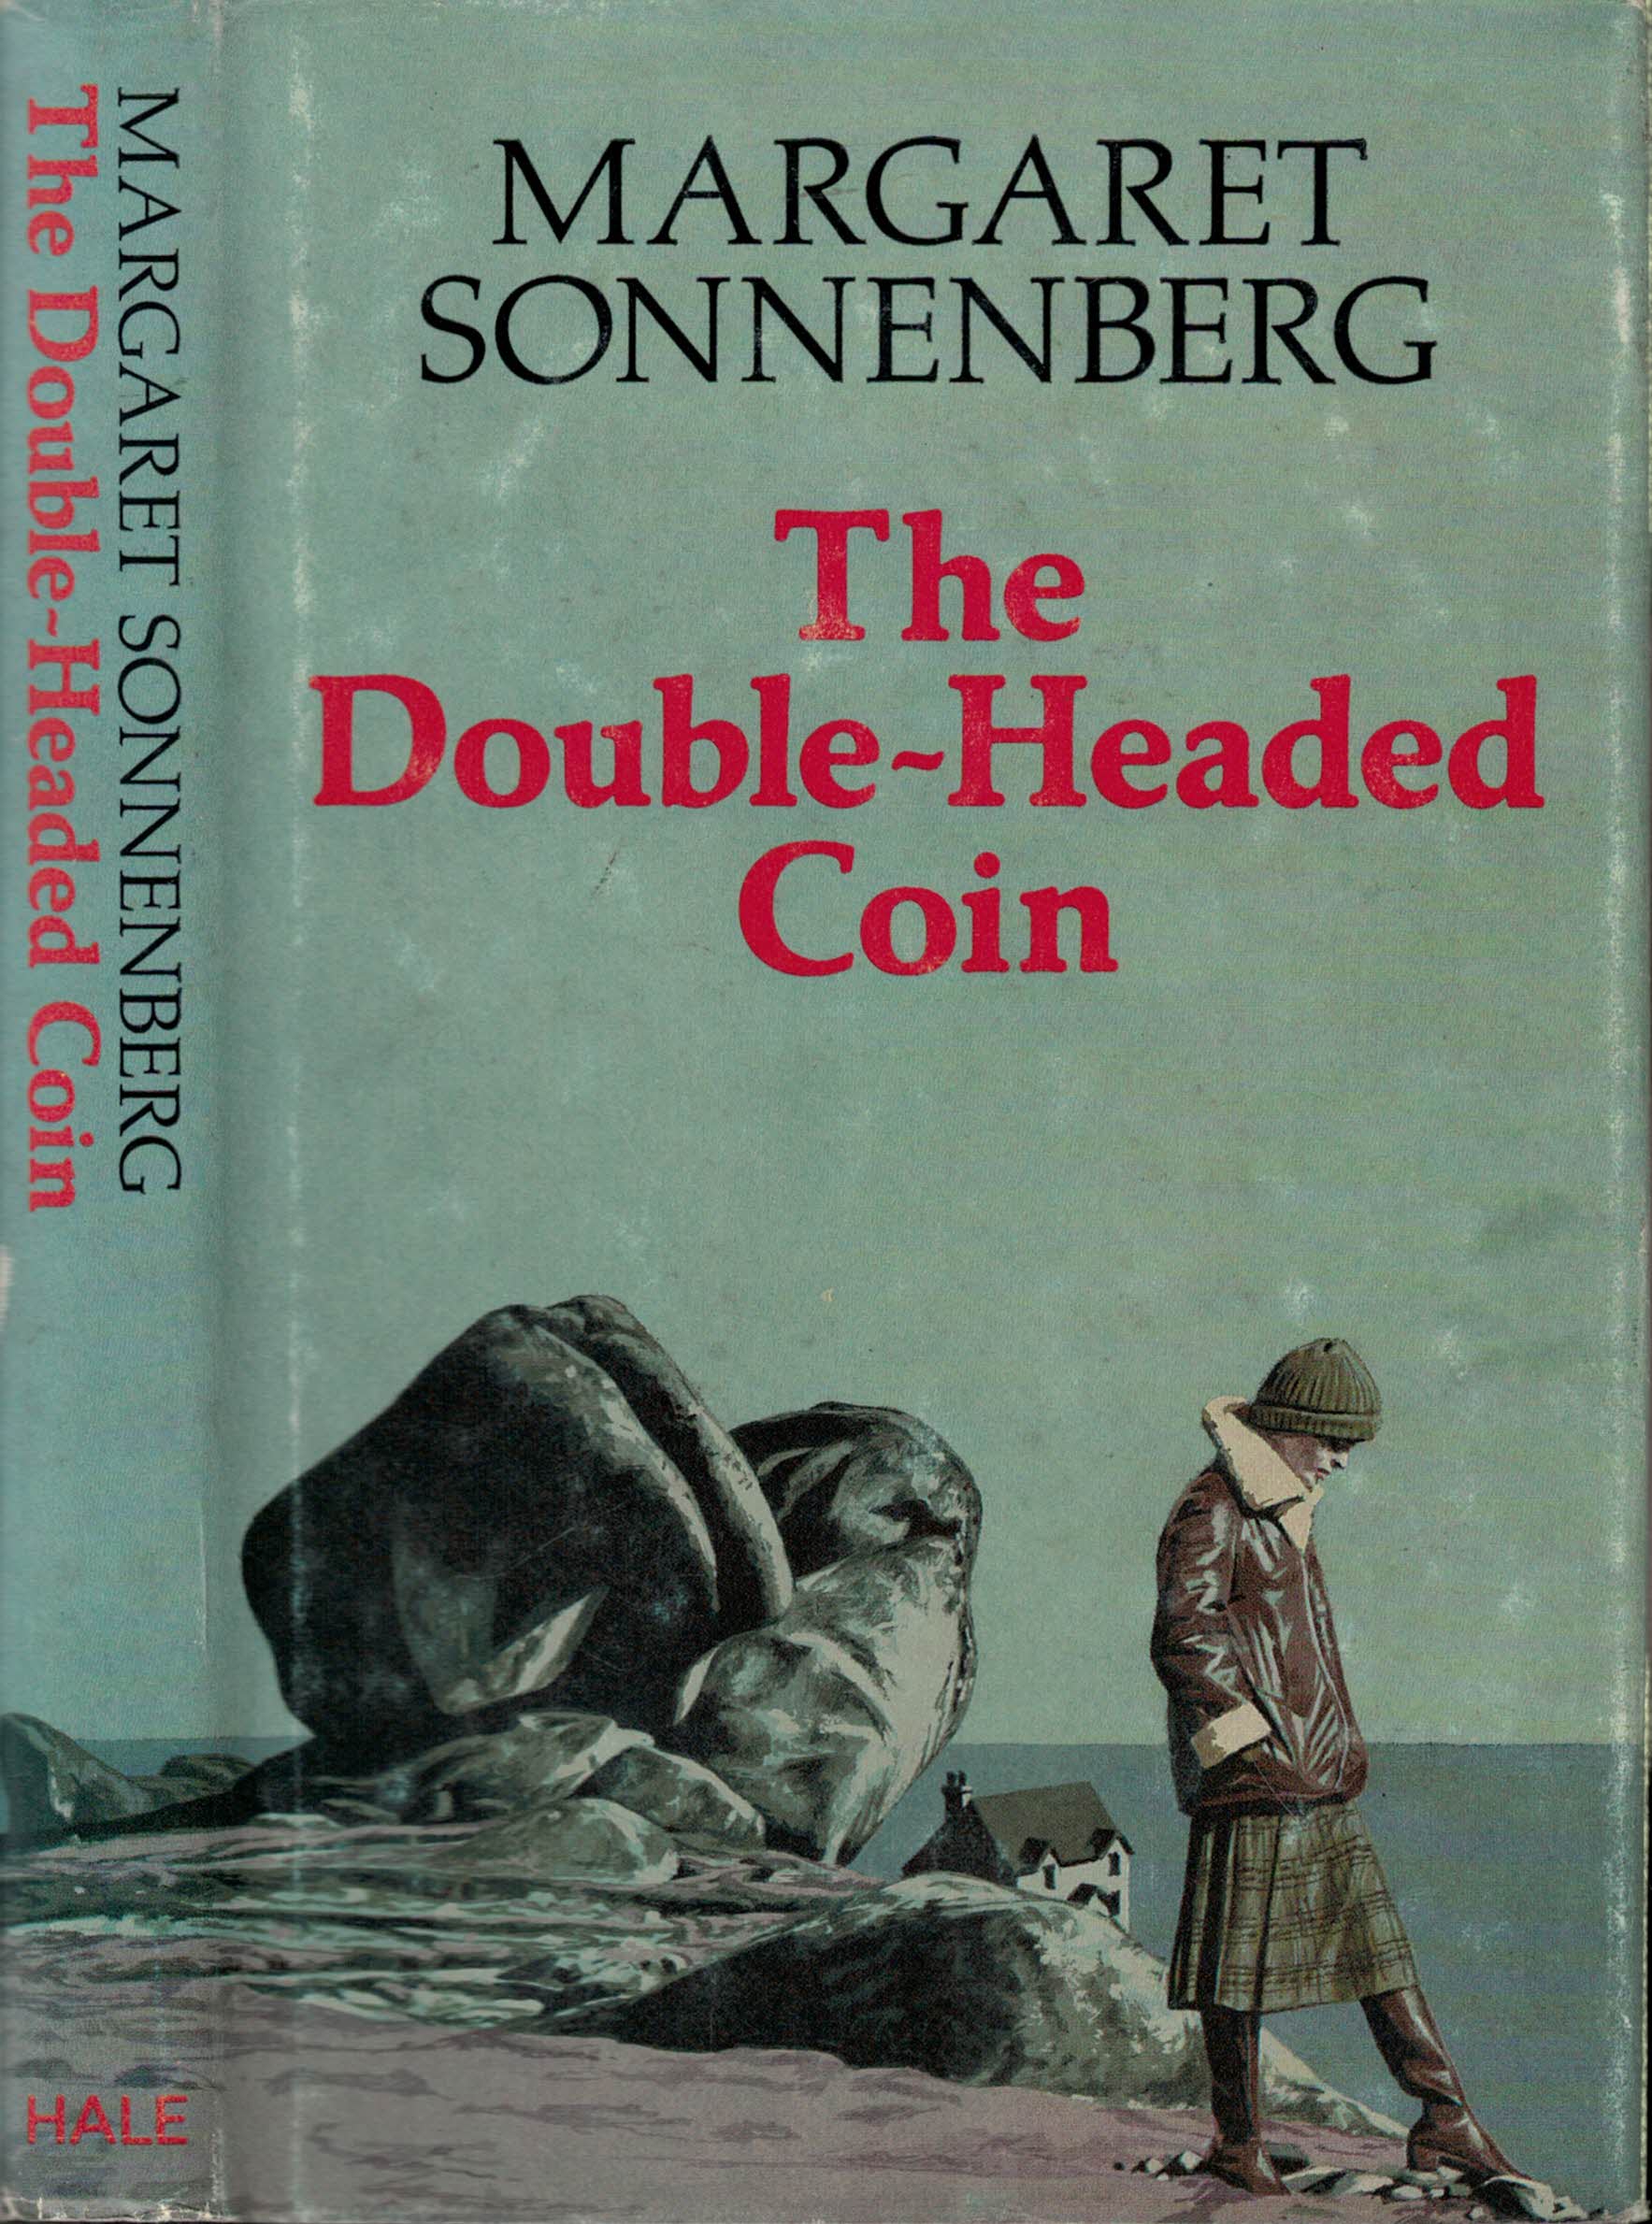 SONNENBERG, MARGARET - The Double-Headed Coin